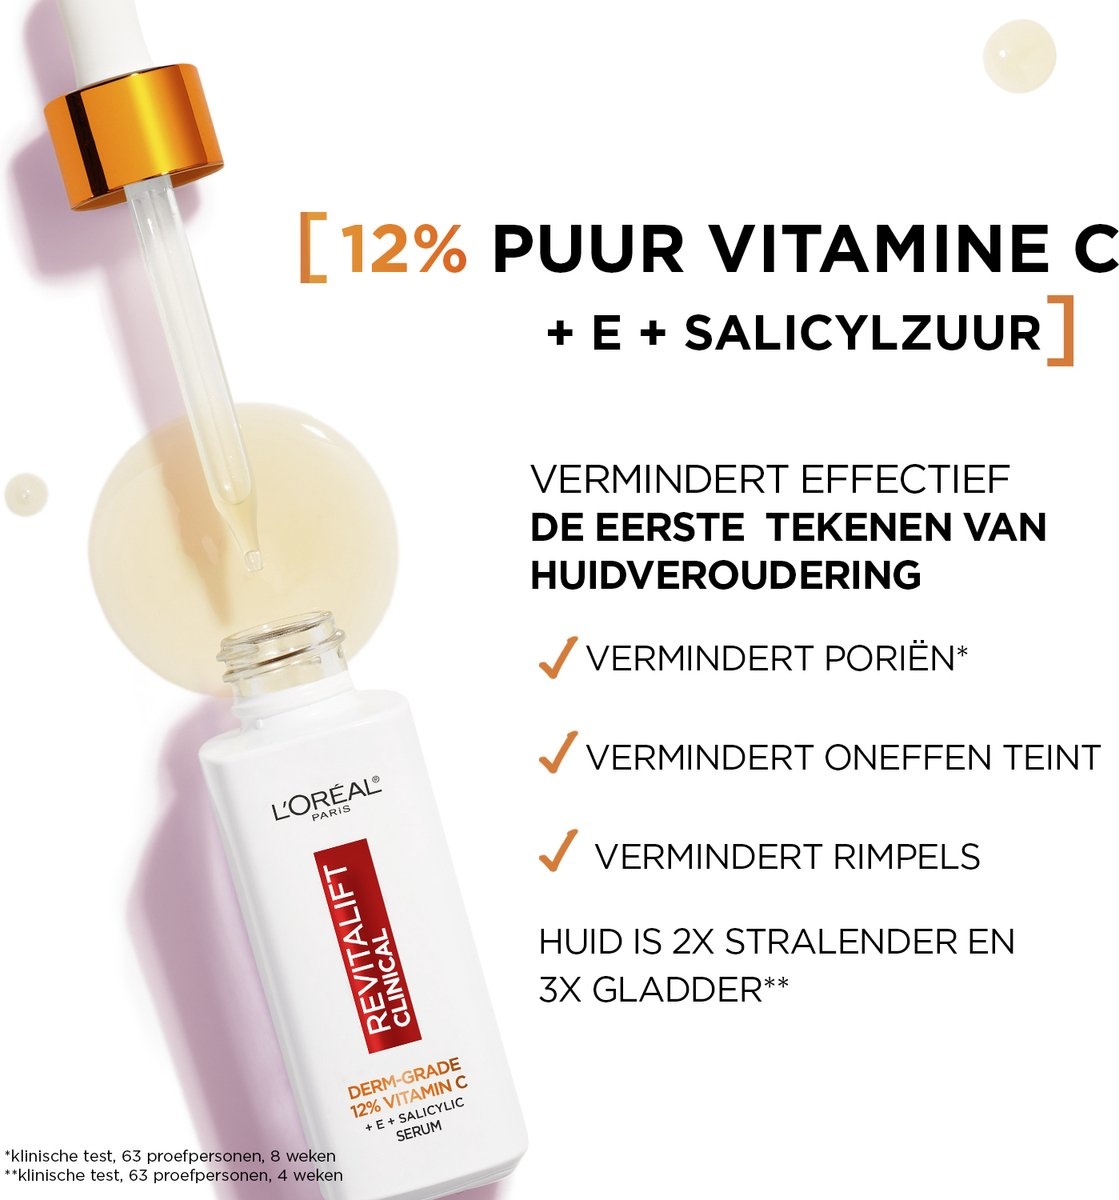 L'Oréal Paris Revitalift Clinical Pure Vitamine C 12% Serum - 30 ml - Verpakking beschadigd